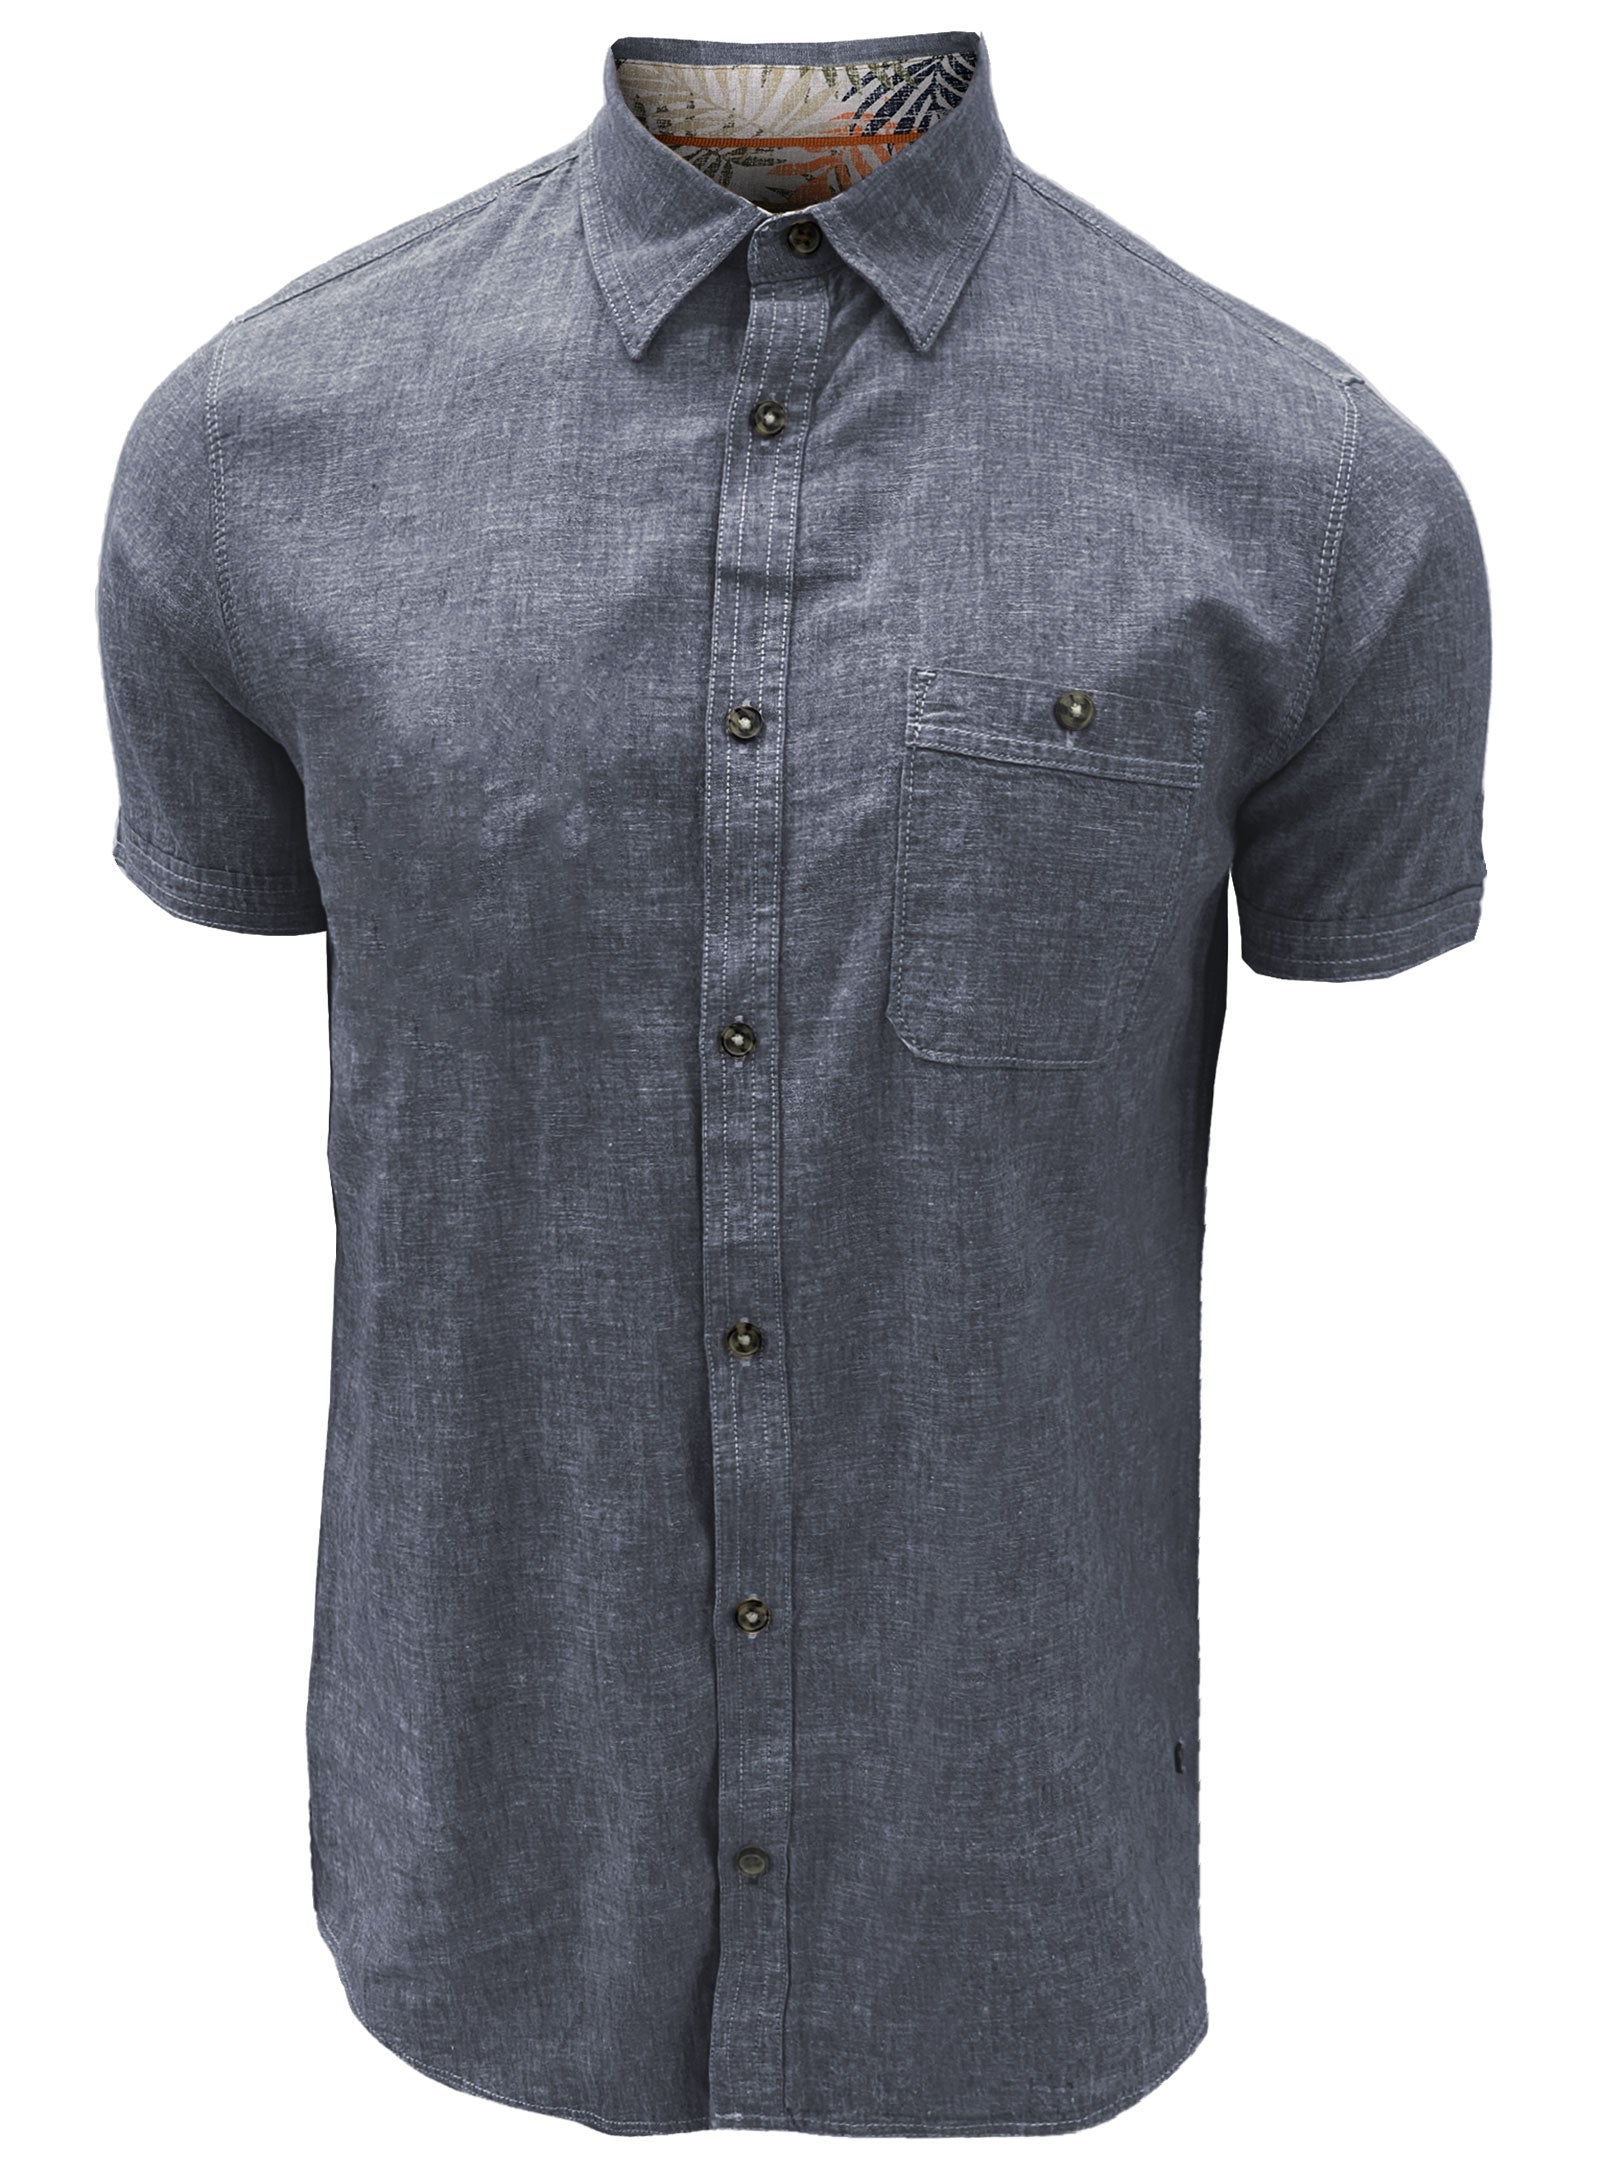 JON | Short-sleeve linen cotton slub shirt